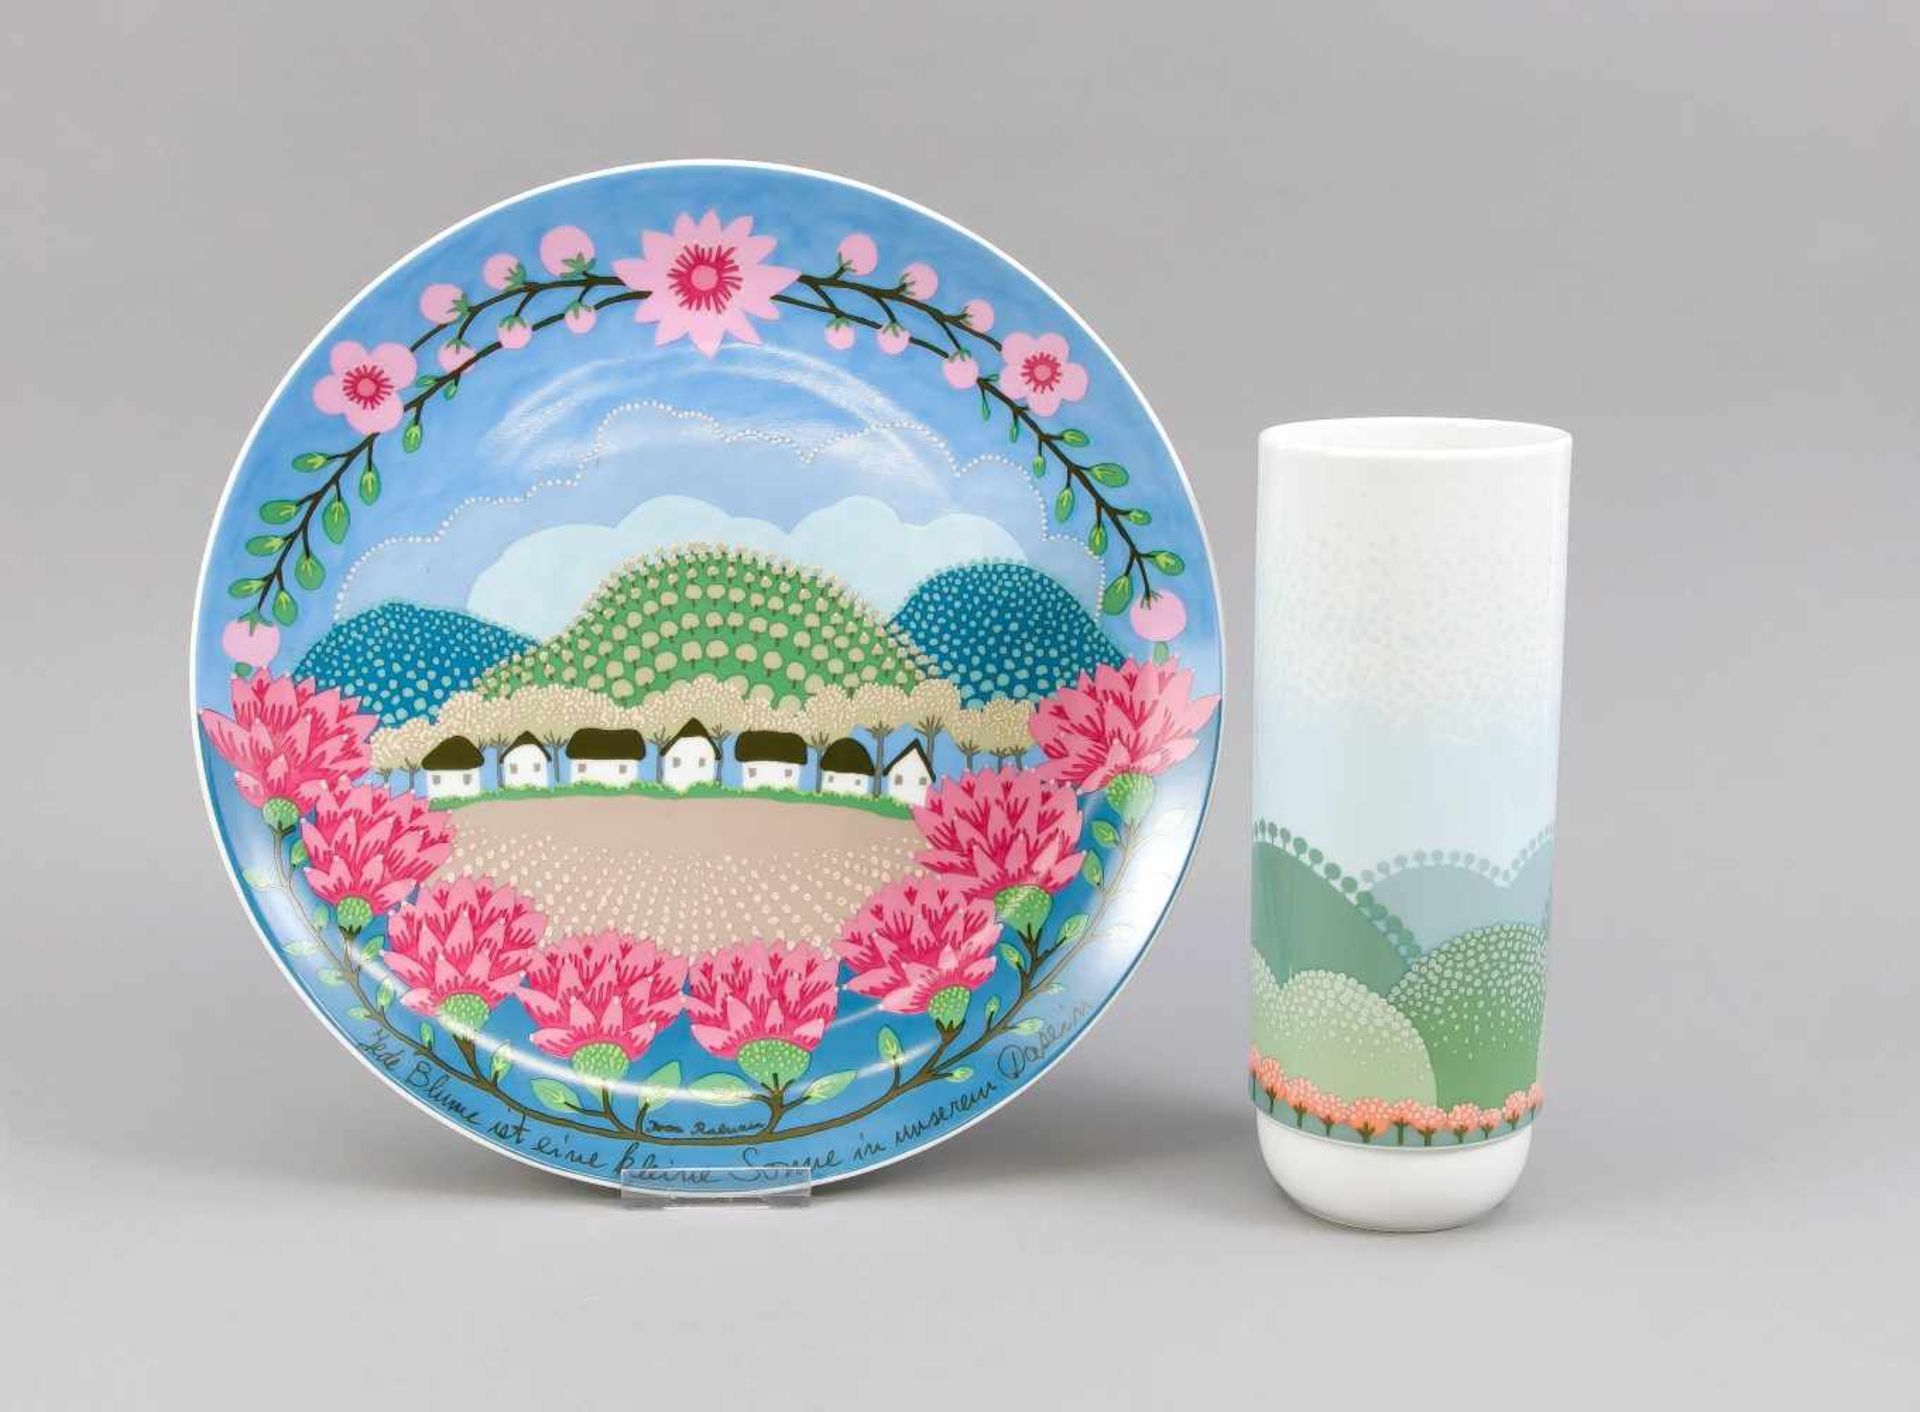 Artist plate and vase, Rosenthal, Studio-Line, artist vase, 1986, shape design Ambrogio